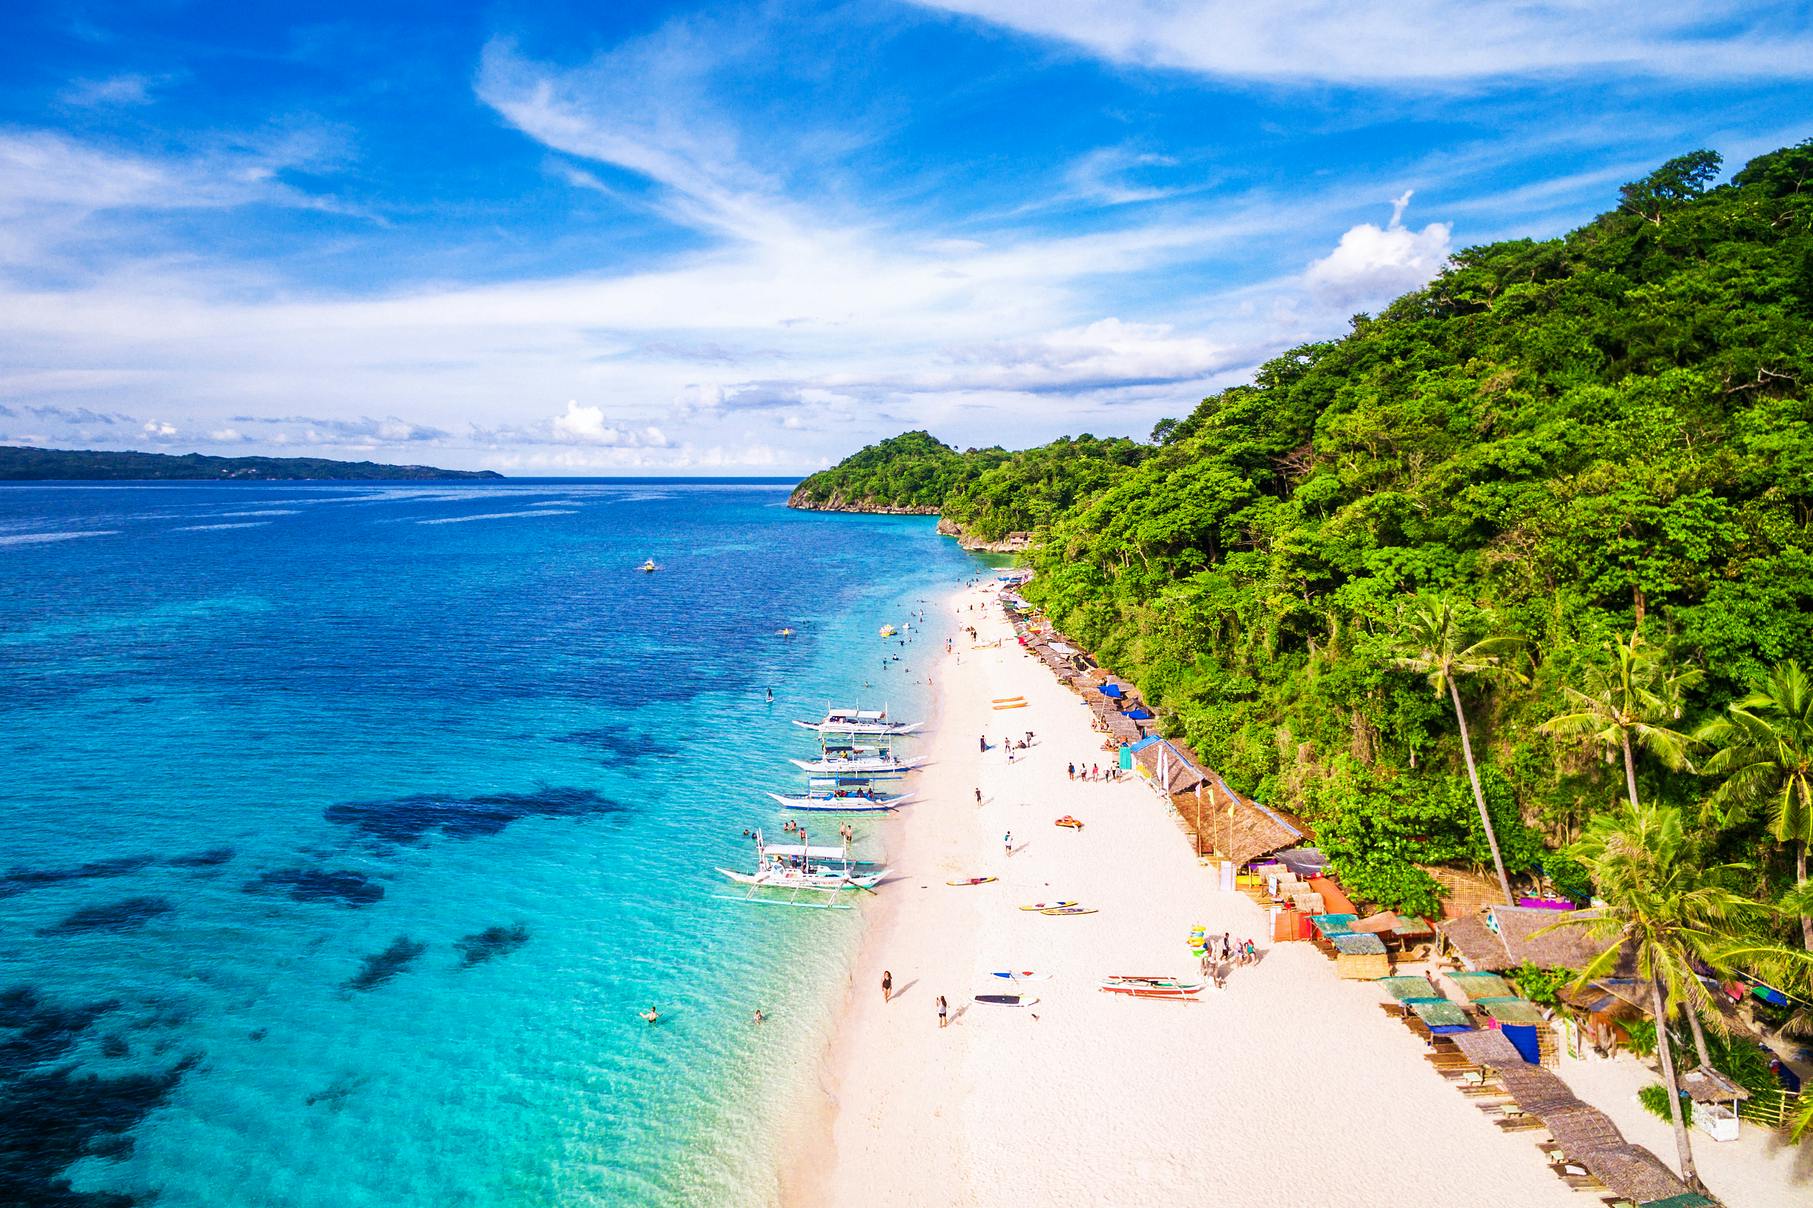 Famous powdery white sand beach of Boracay Island